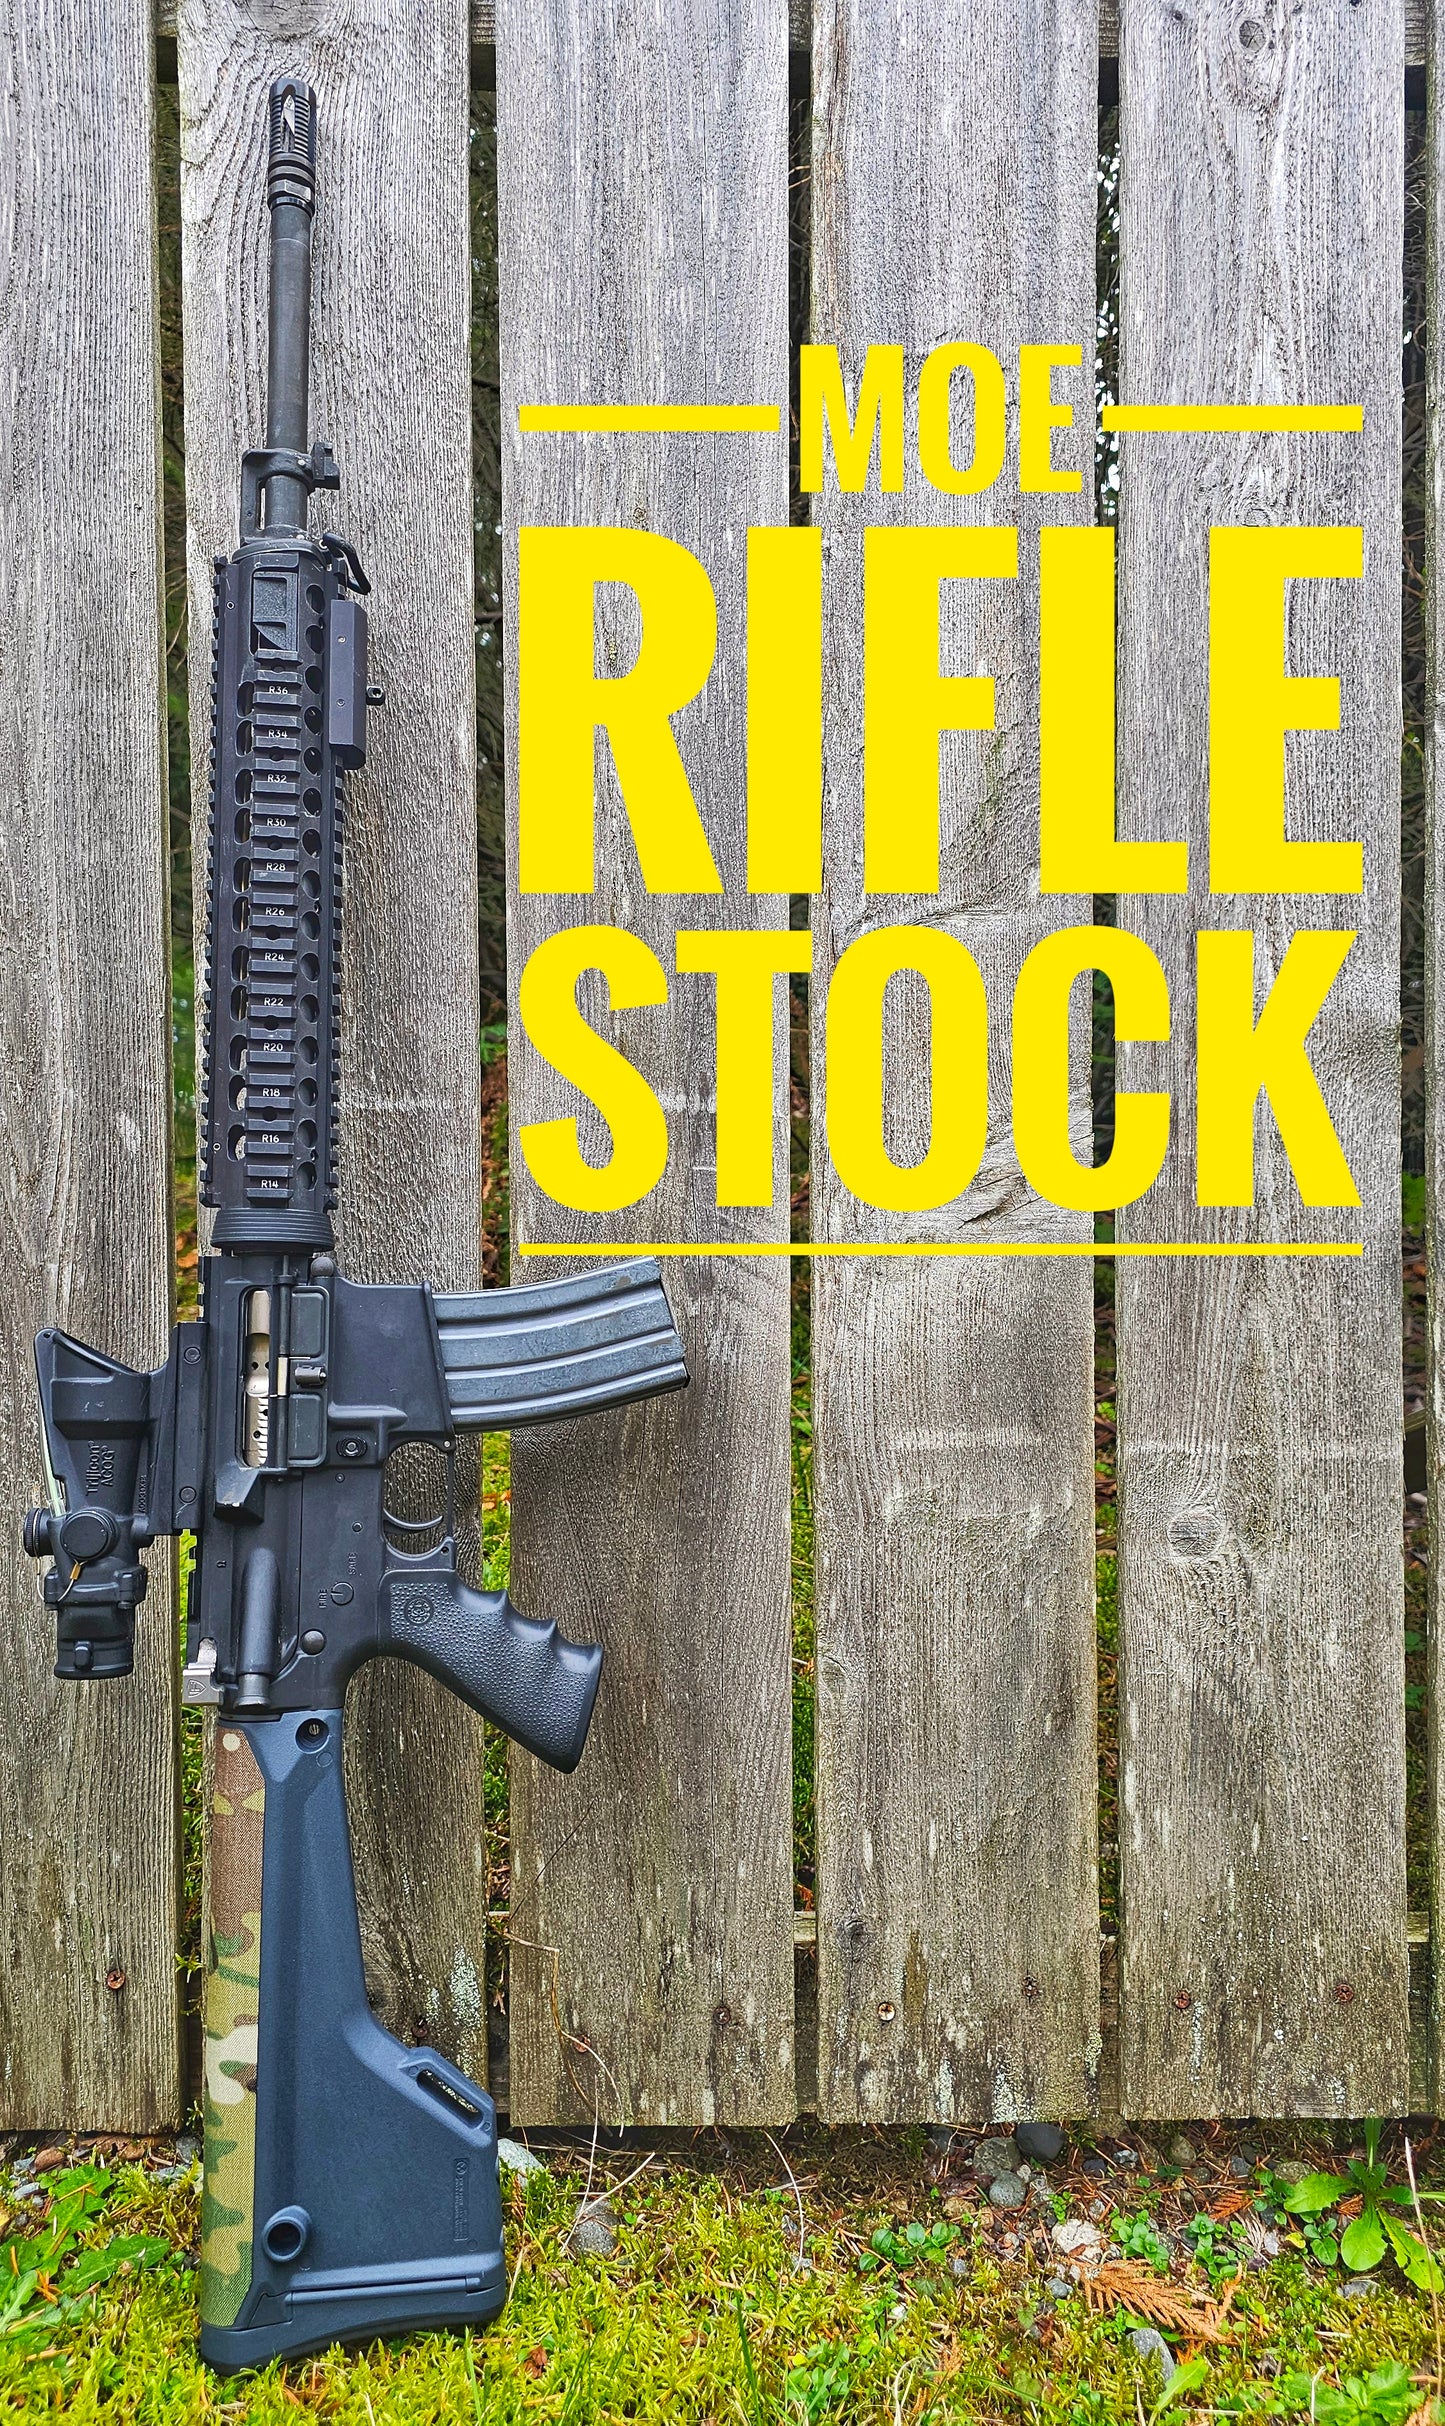 Magpul MOE Fixed Rifle Stock